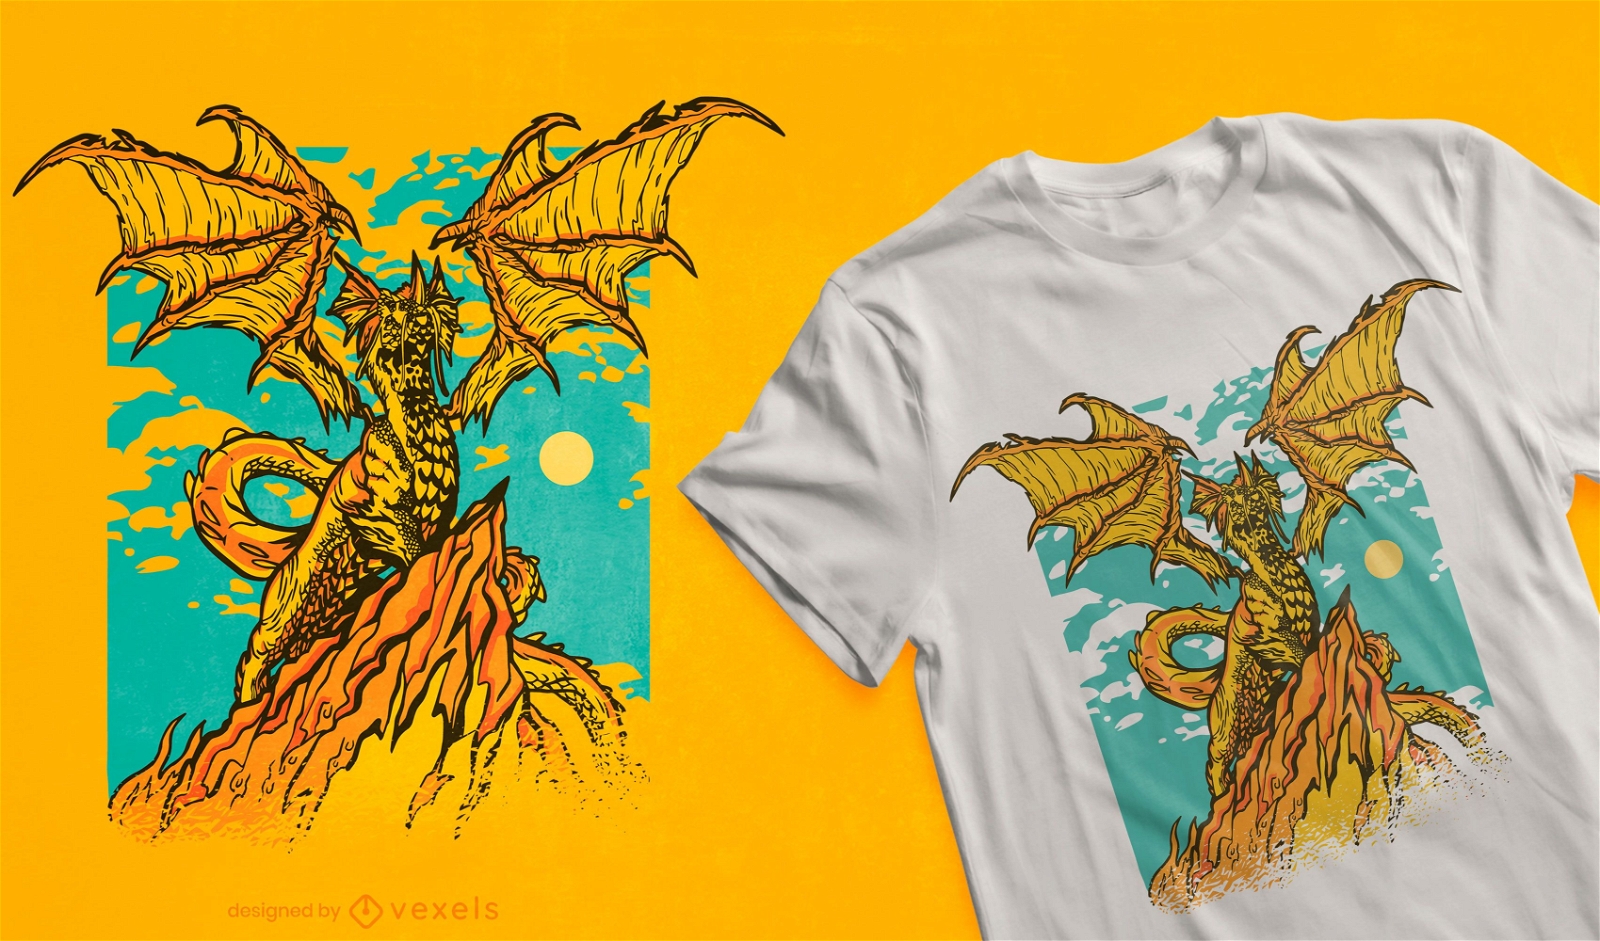 Powerful dragon creature t-shirt design